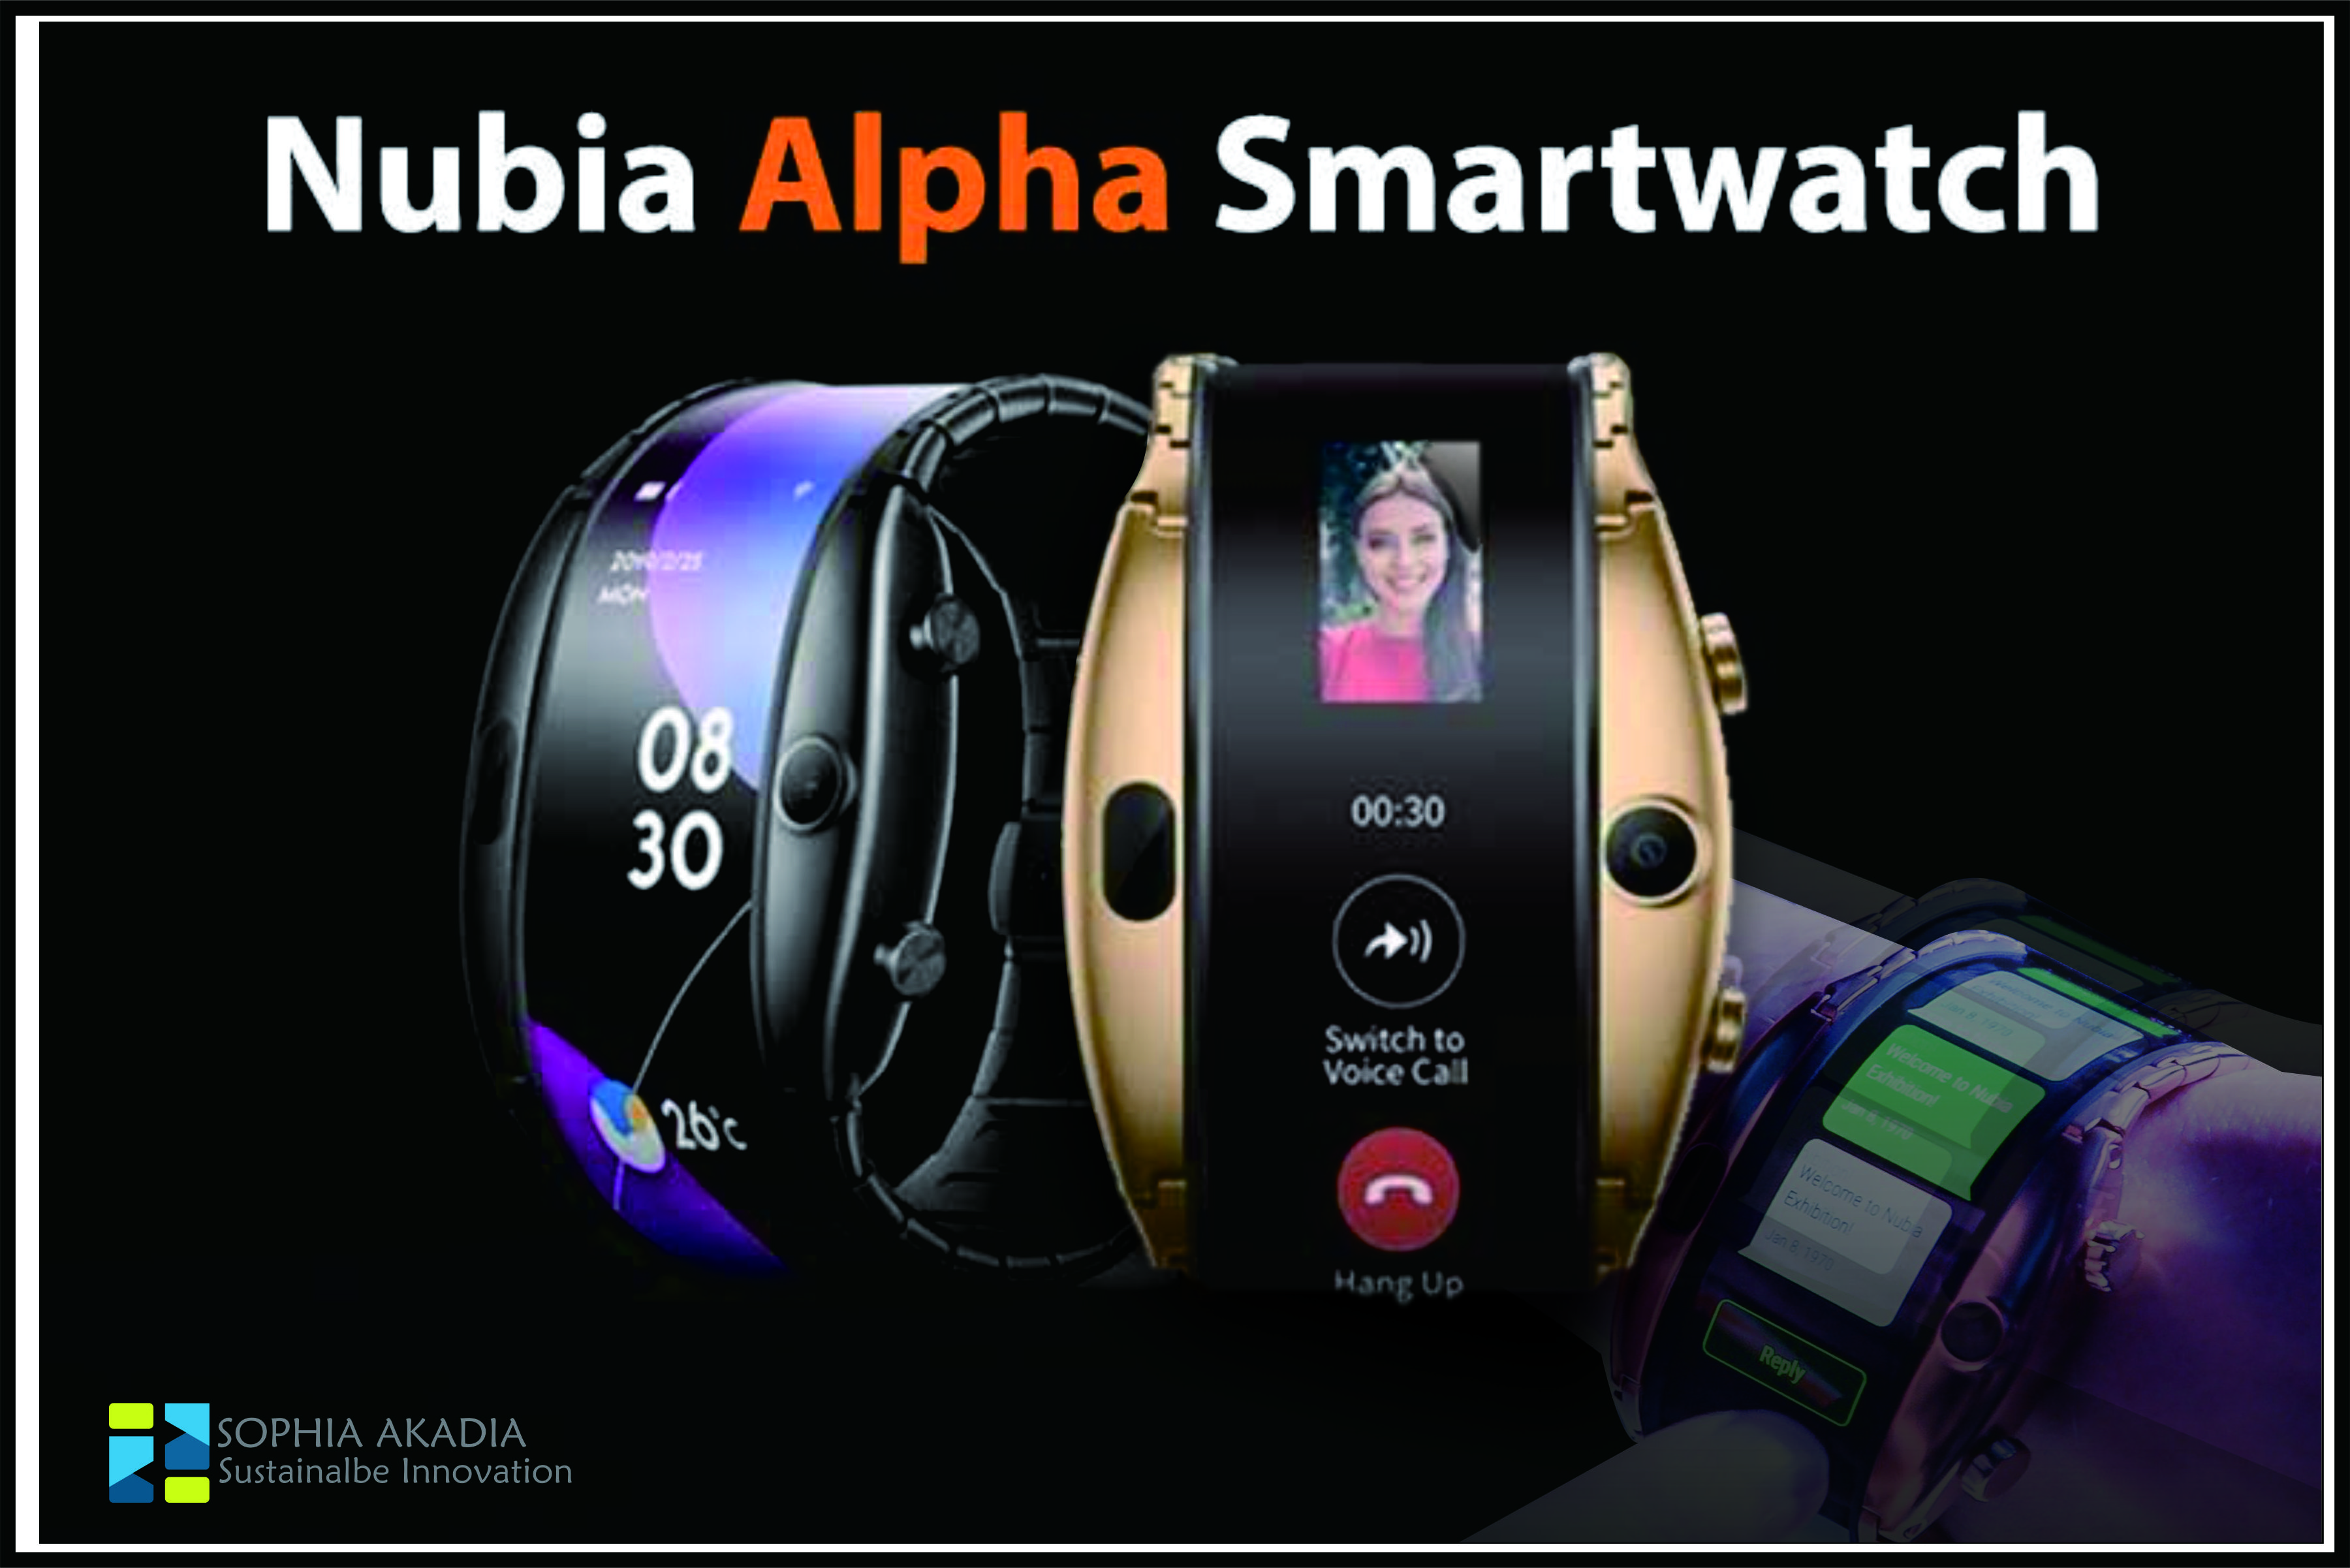 Nubia Alpha (Smartwhatch)